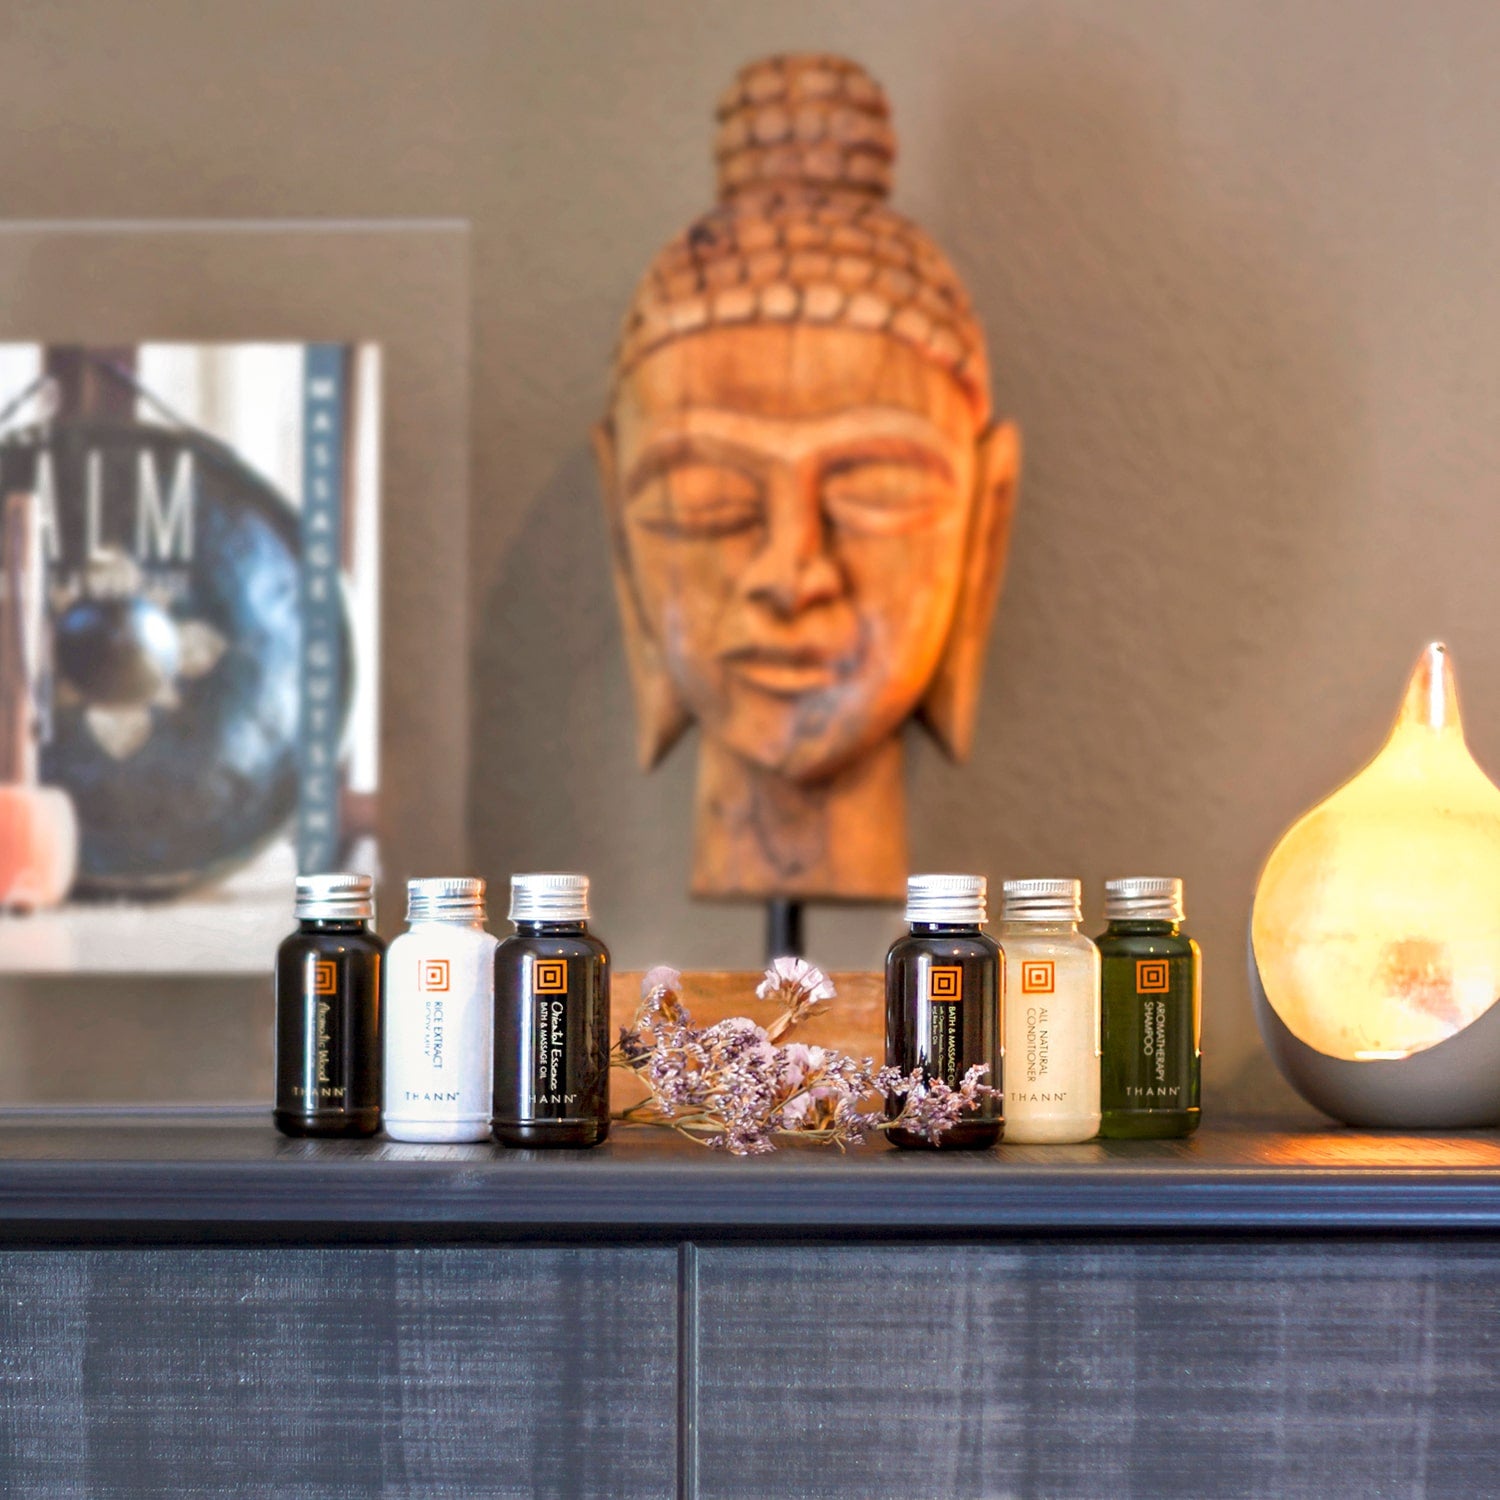 Thann Aromatic Wood Bath &amp; Massage Oil